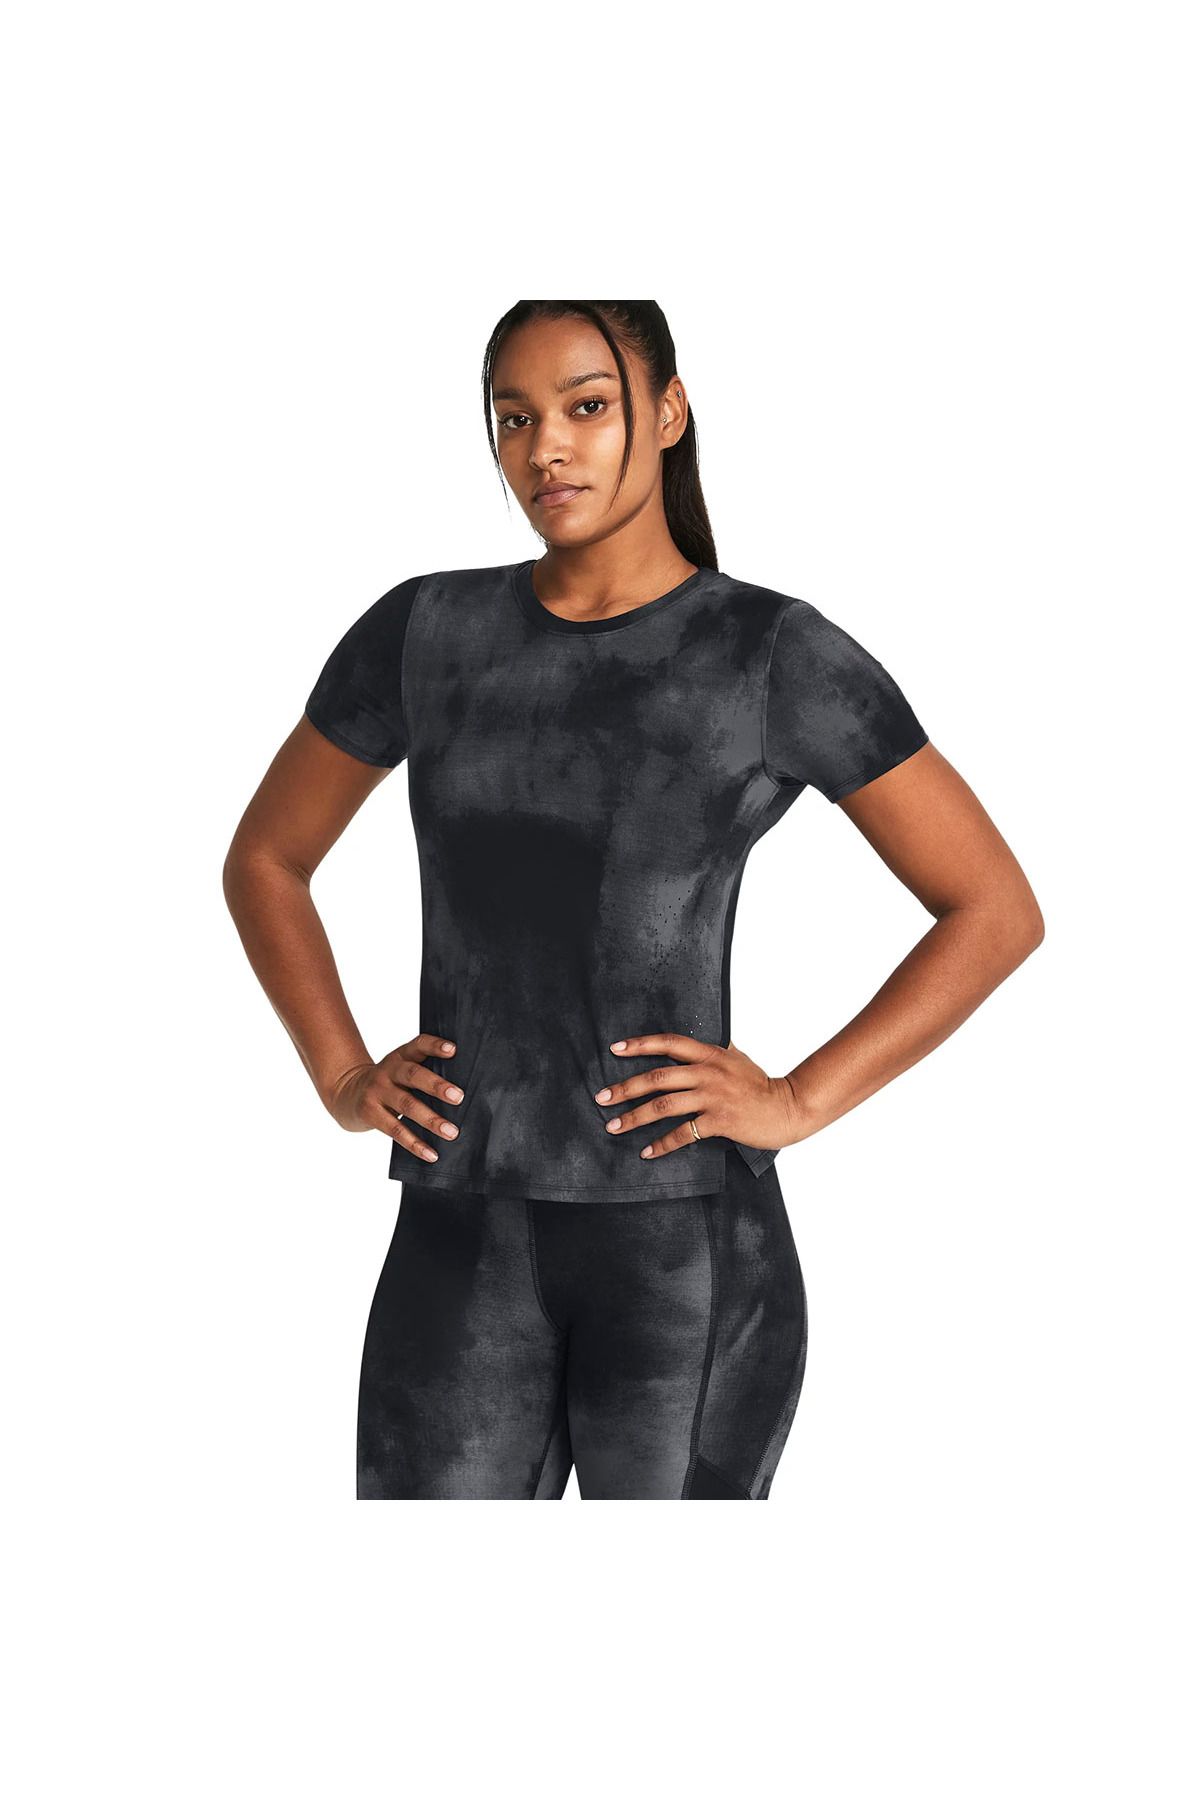 Under Armour Launch Elite Kadın Siyah Koşu T-Shirt 1383365-001